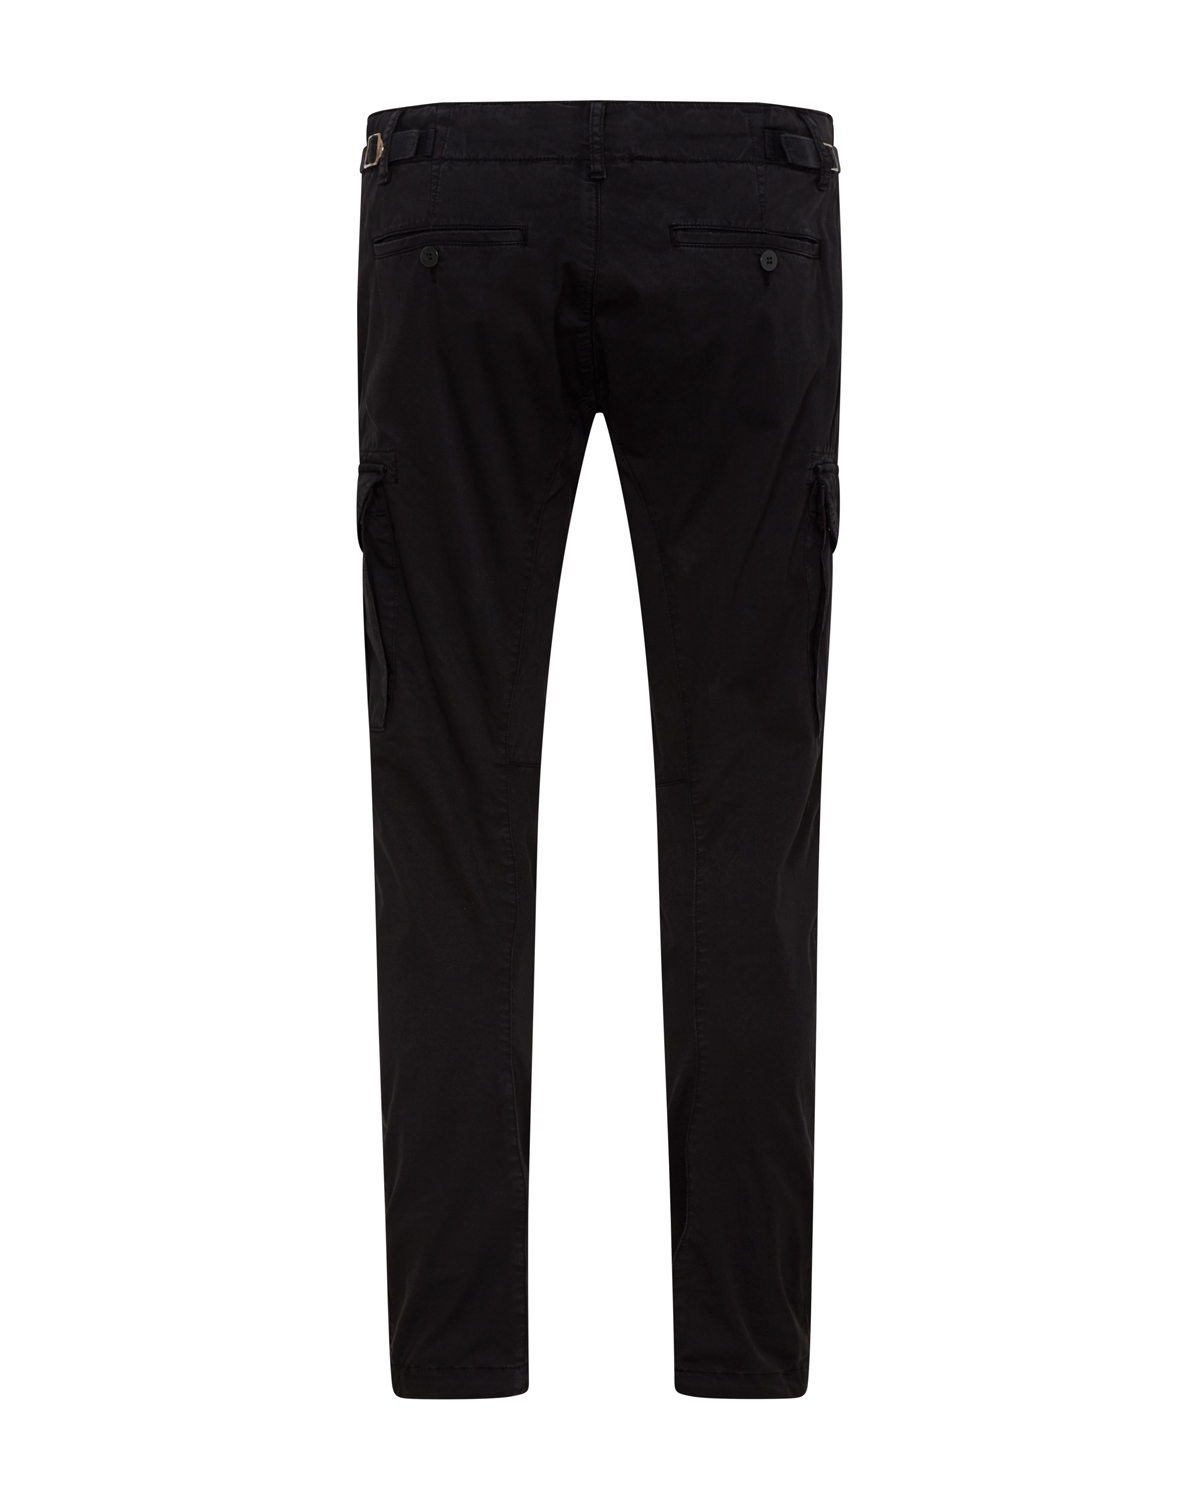 C.P. Company Men's Slim Fit Cargo Trousers Black - Linea Fashion